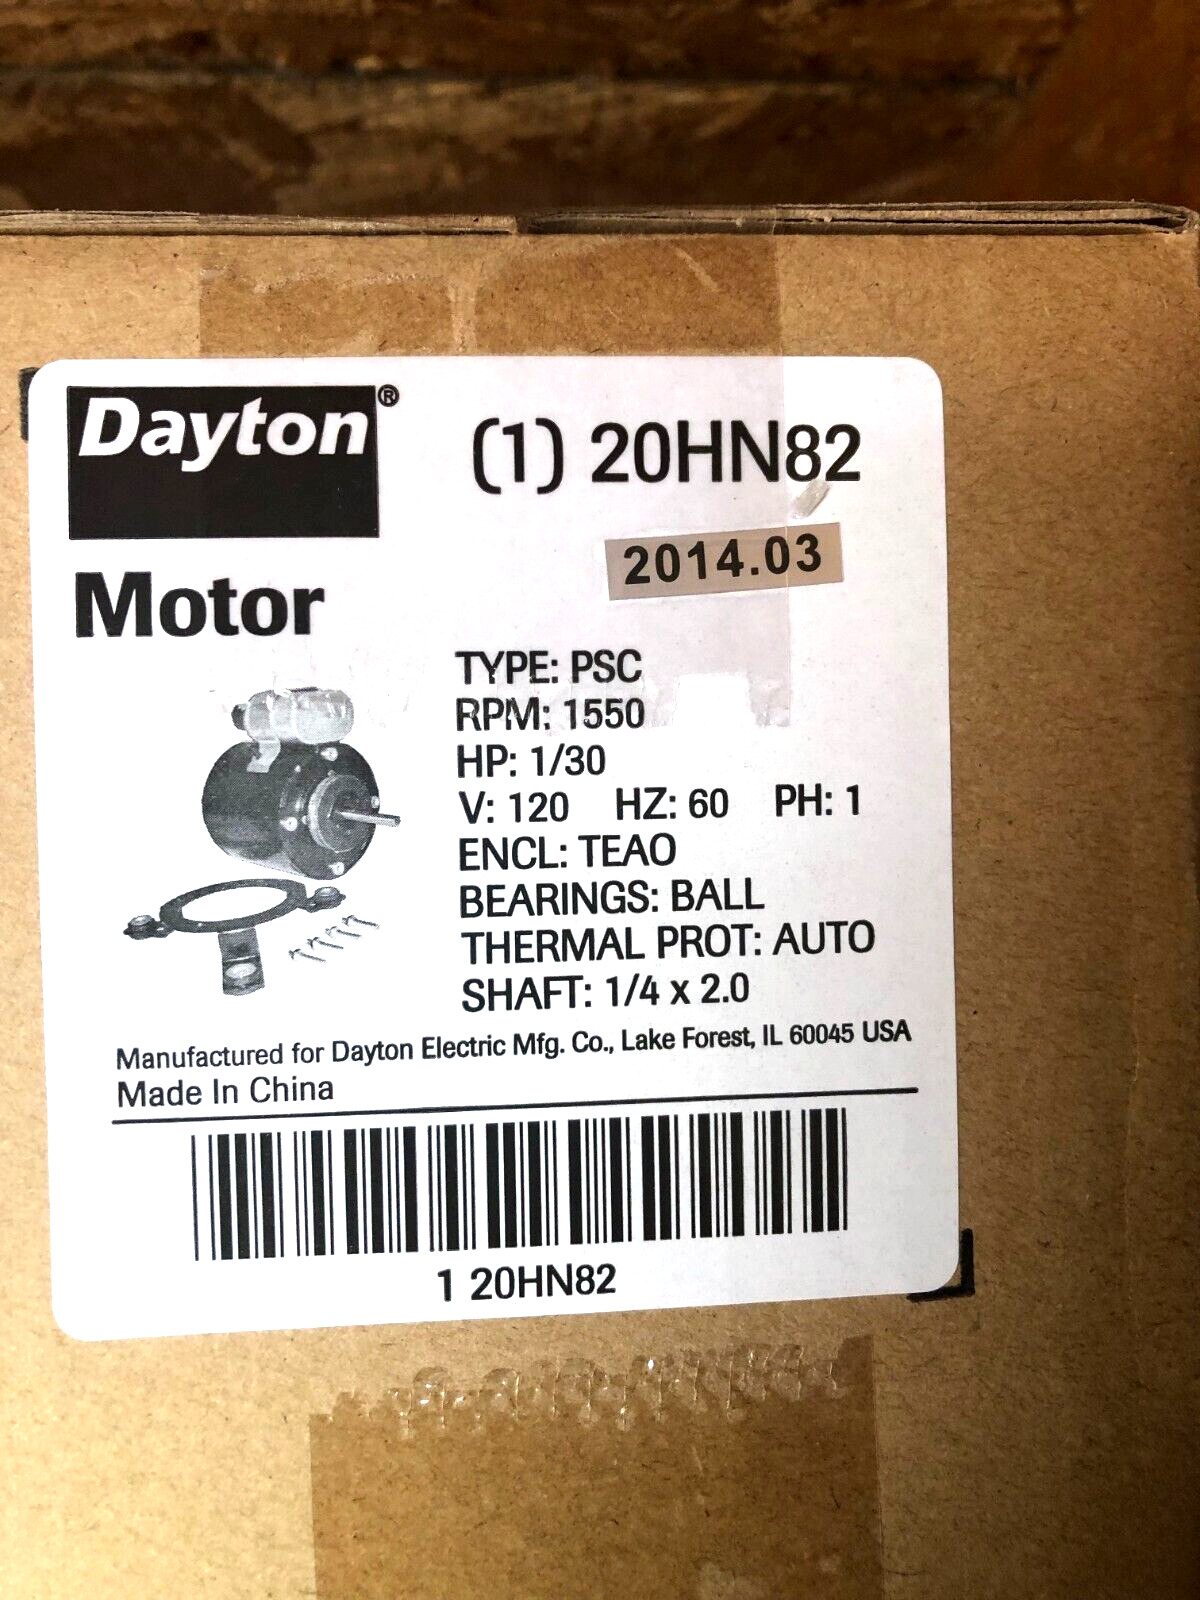 NEW DAYTON 20HN82 HVAC PSC Motor 1/30 HP 1550 RPM 120V 1/4